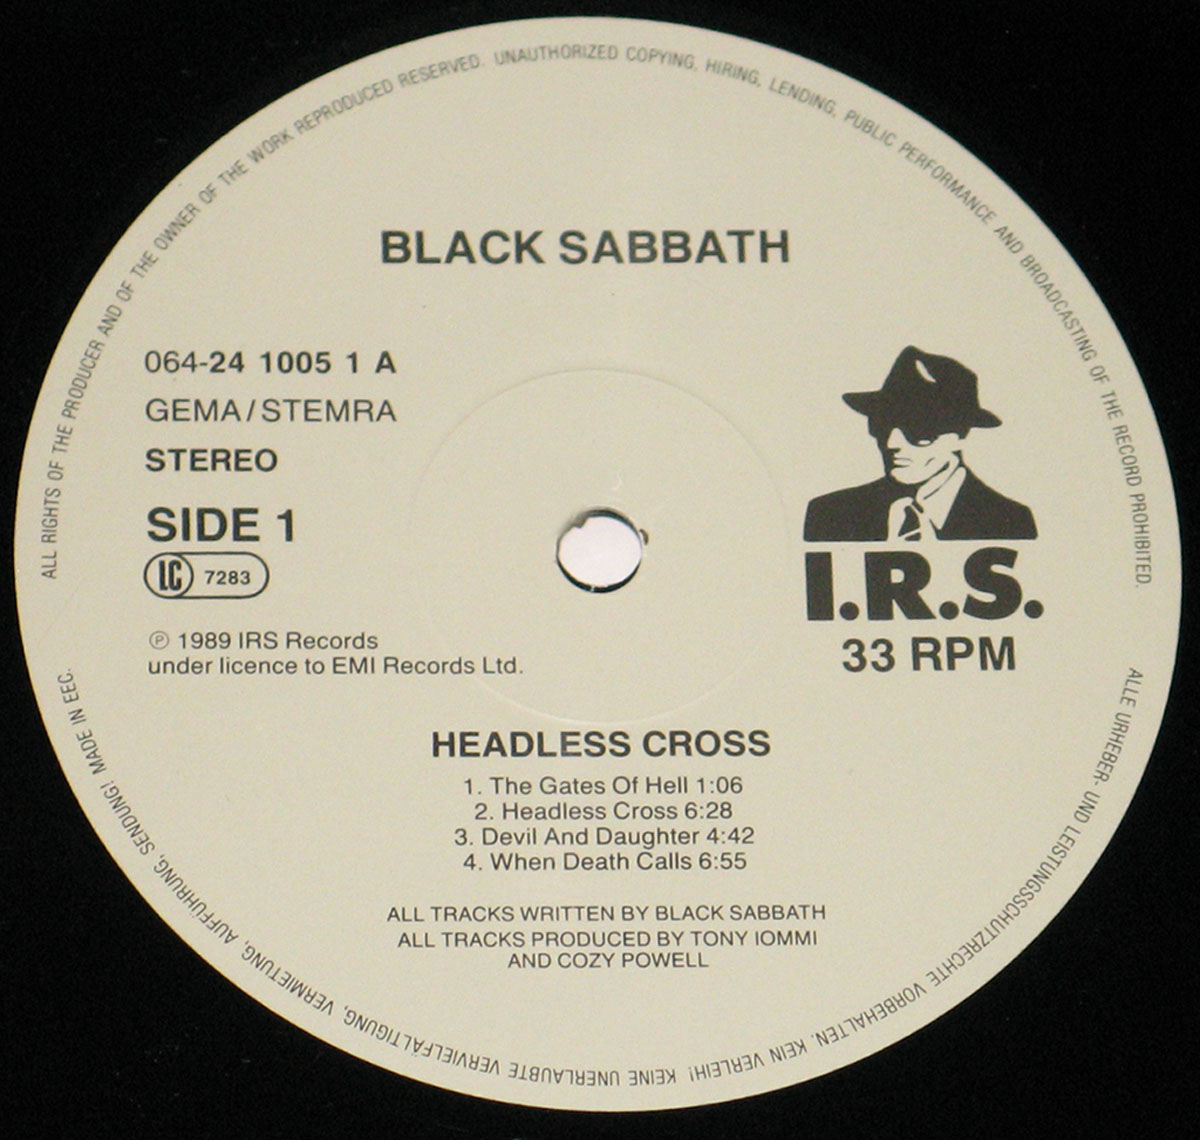 High Resolution Photo black sabbath headless cross 